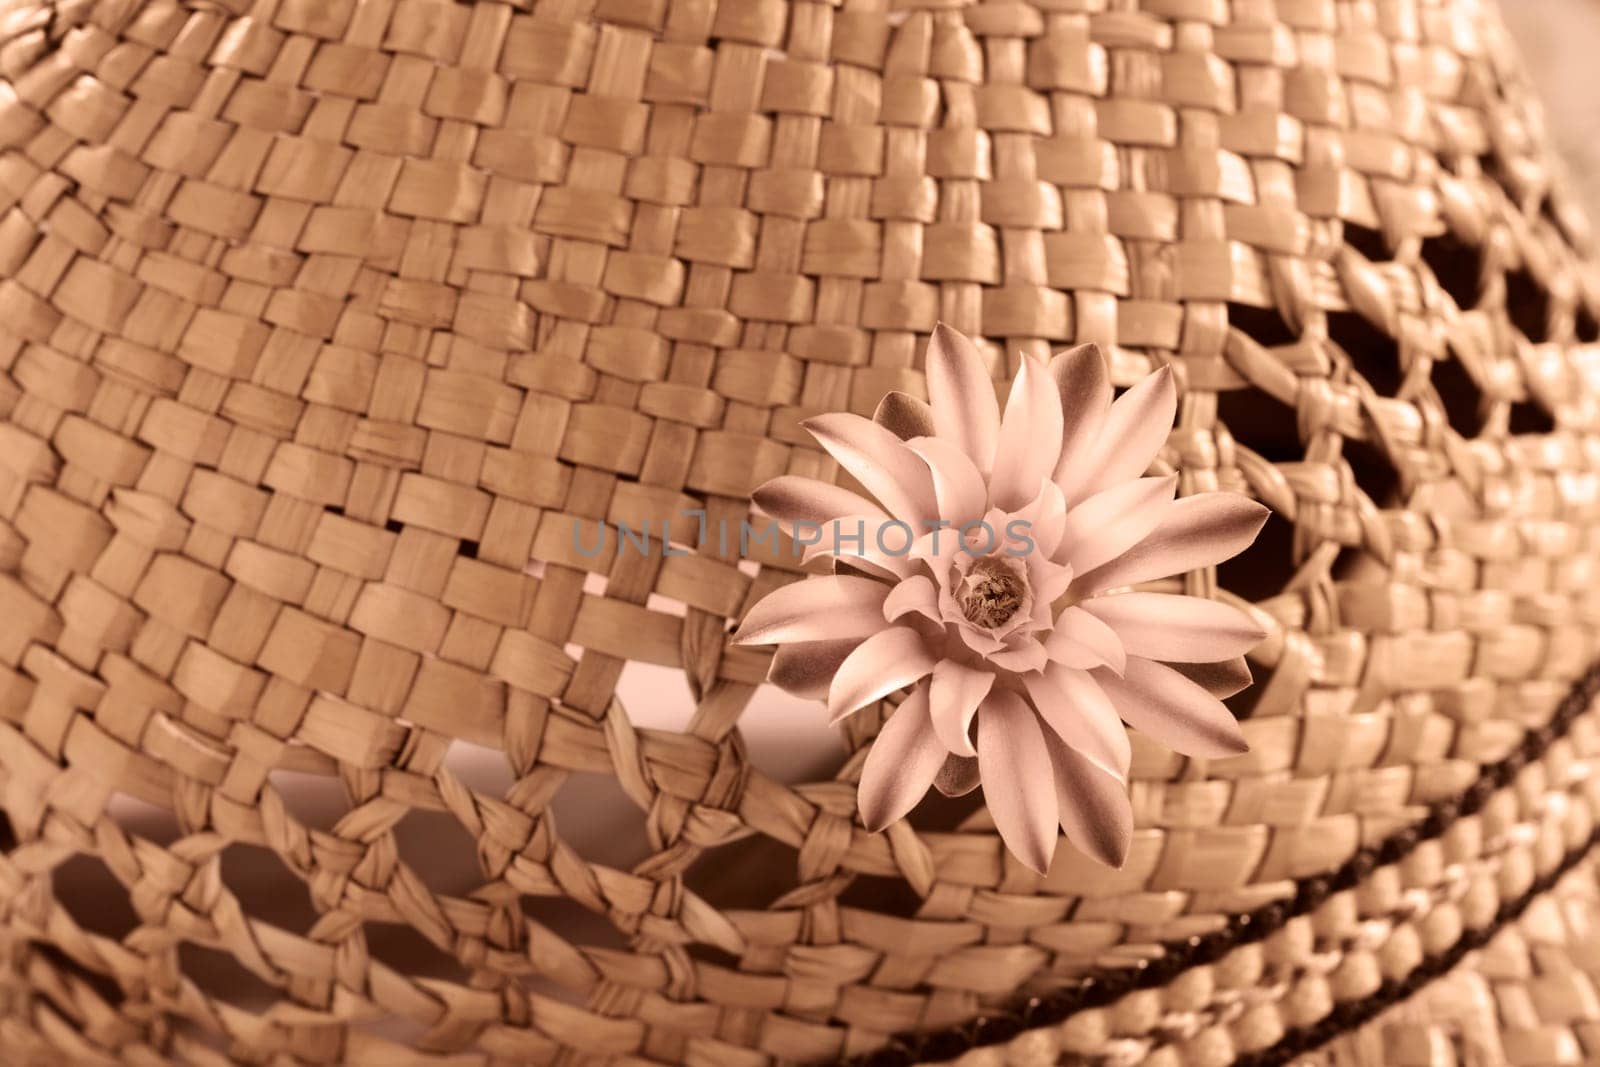 Cactus flower , brown monochrome studio shot by victimewalker